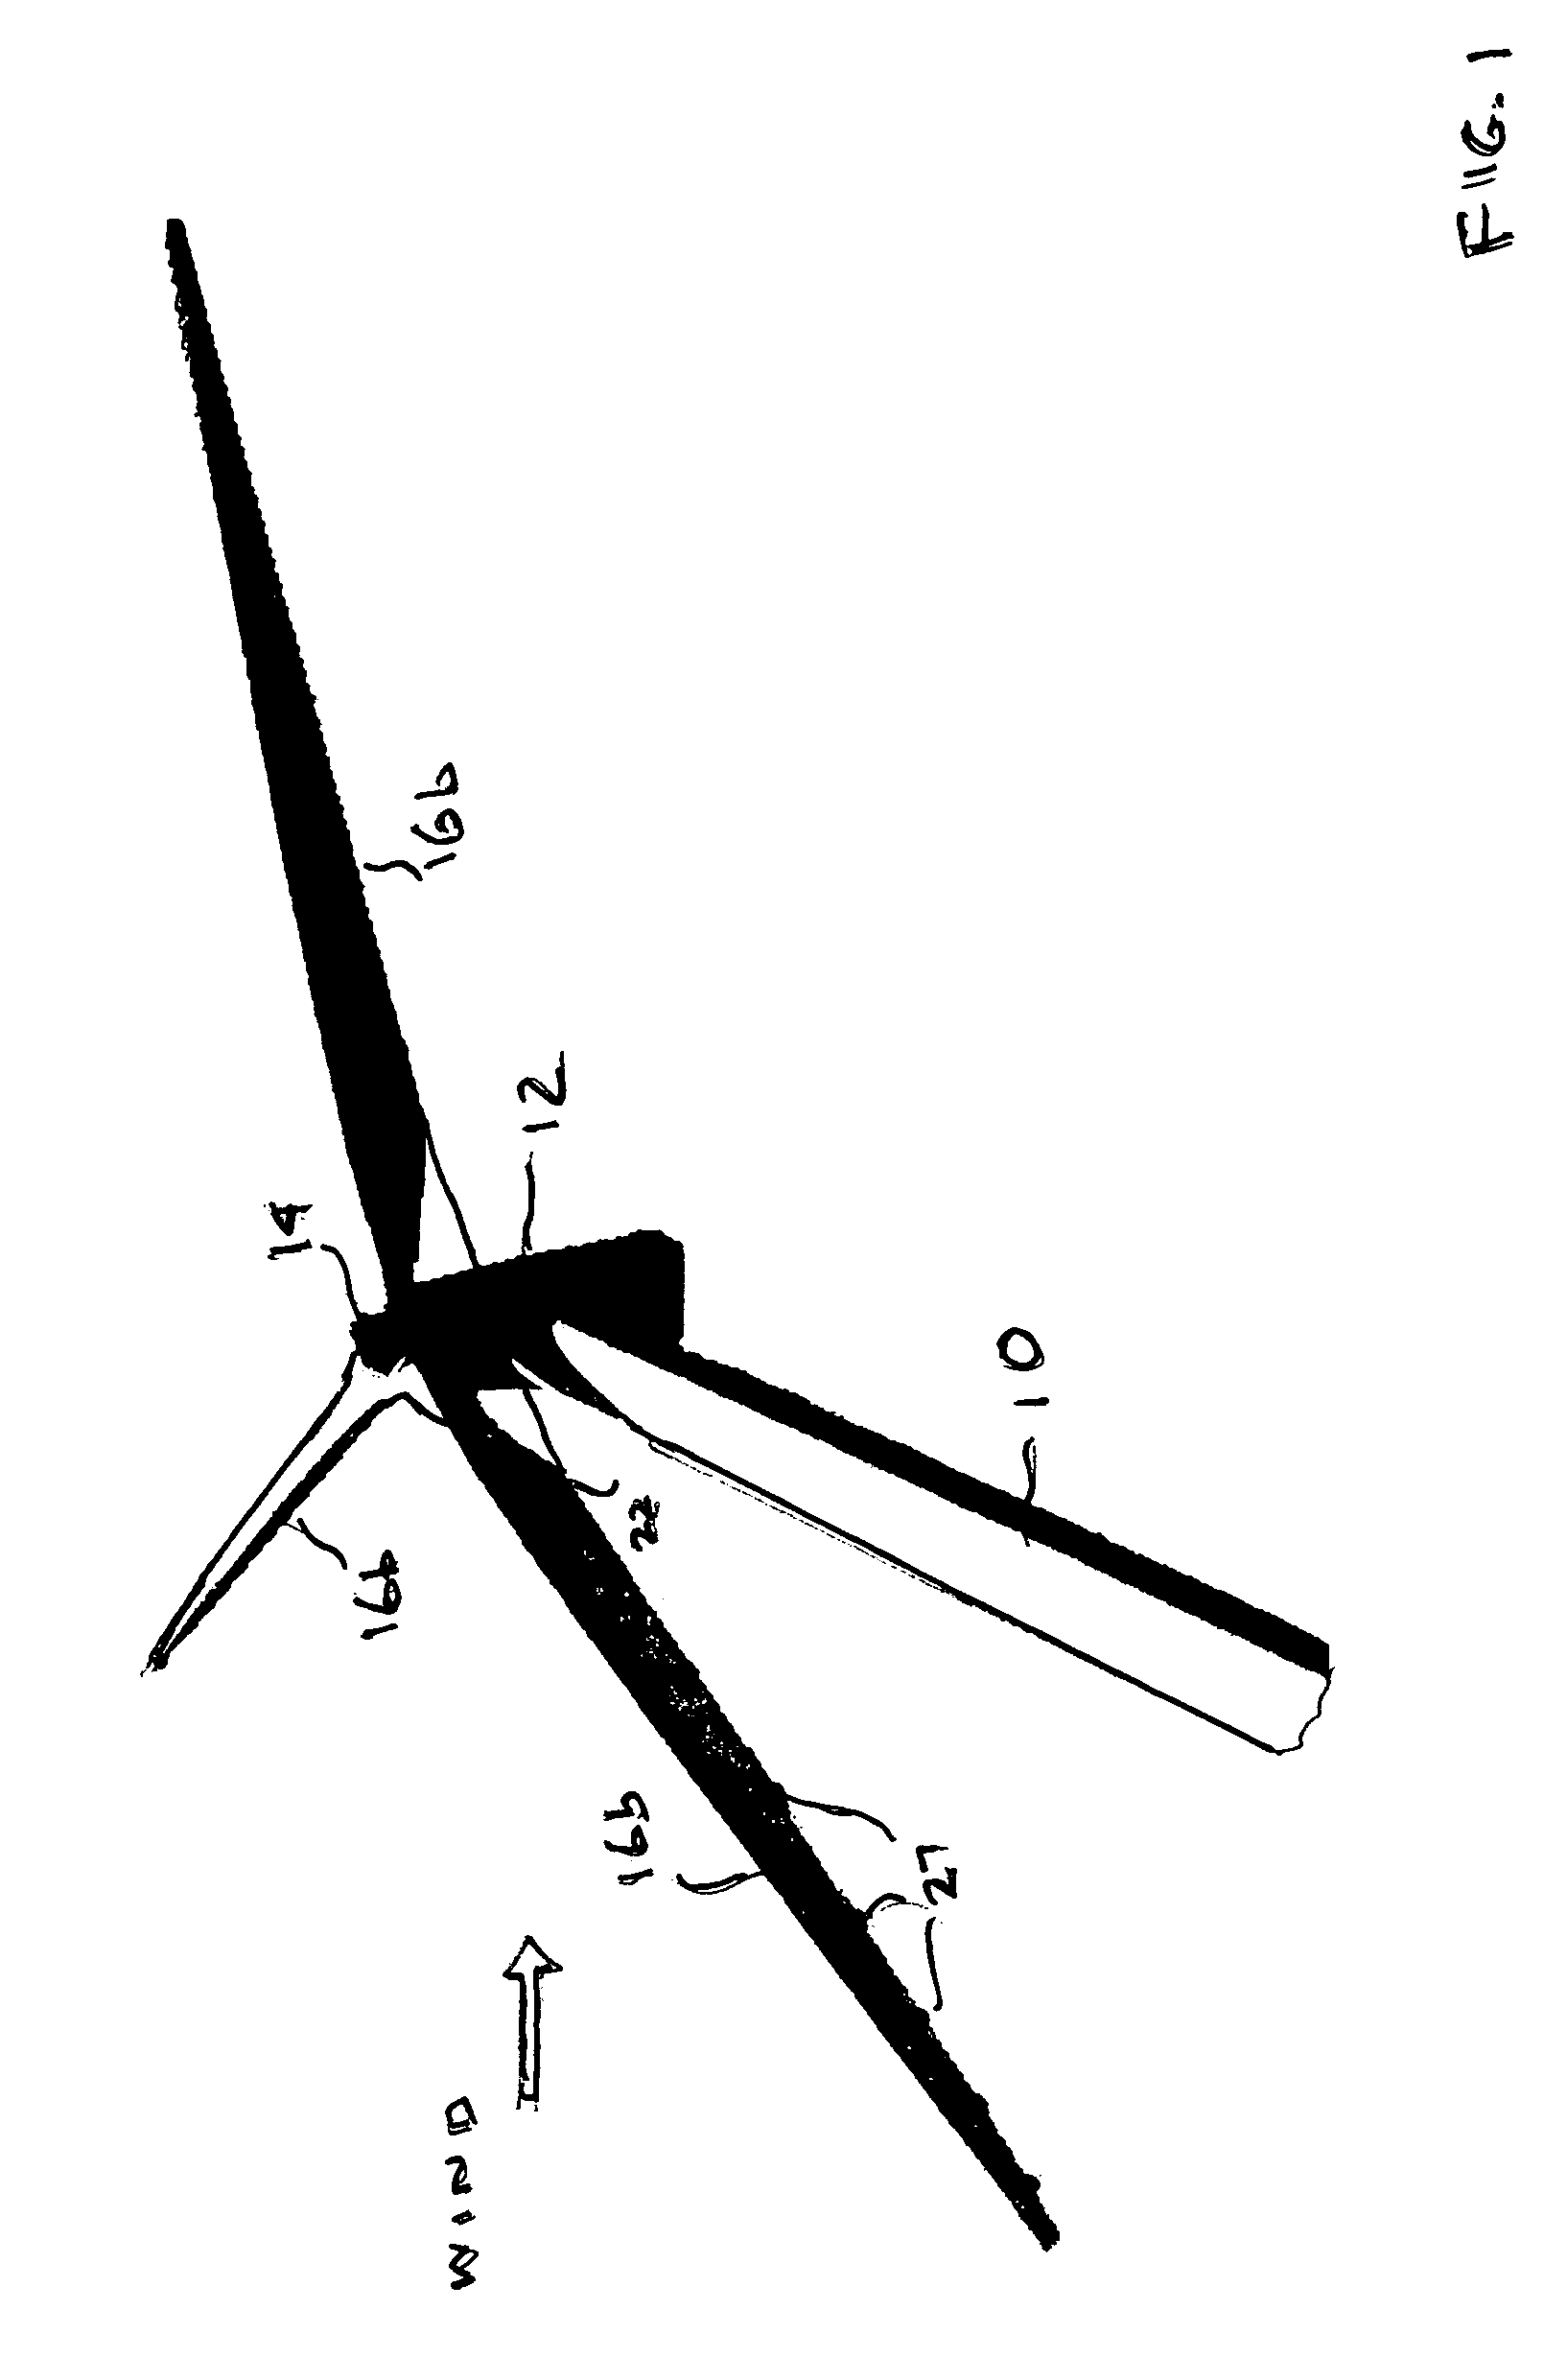 Blade for wind turbine